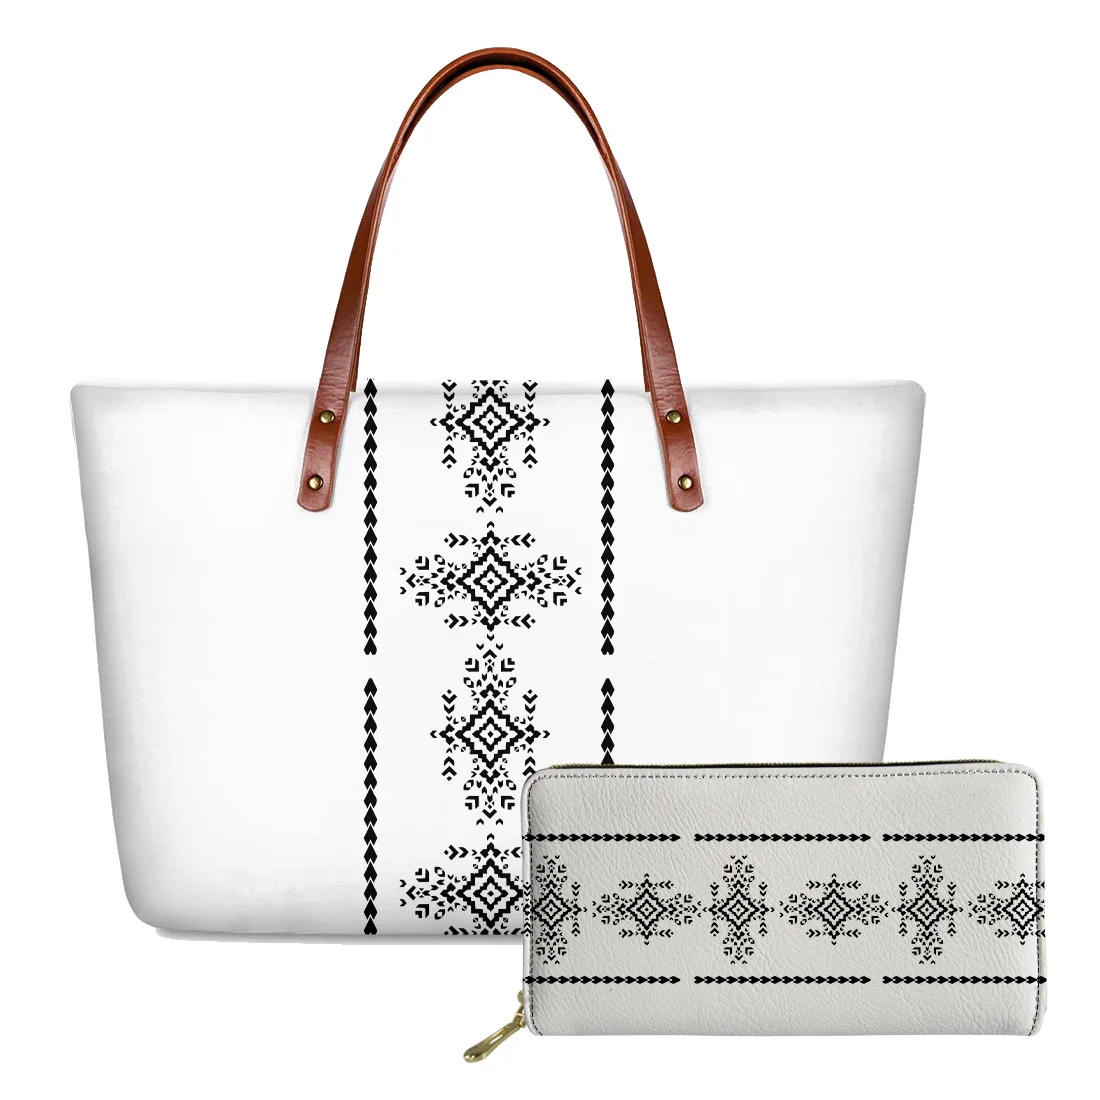 ELVISWORDS Customize Handbags&Purse Set For Women Lady Top-Handle Bag Polynesian Traditional Tribal Printed Shoulder Bags Wallet